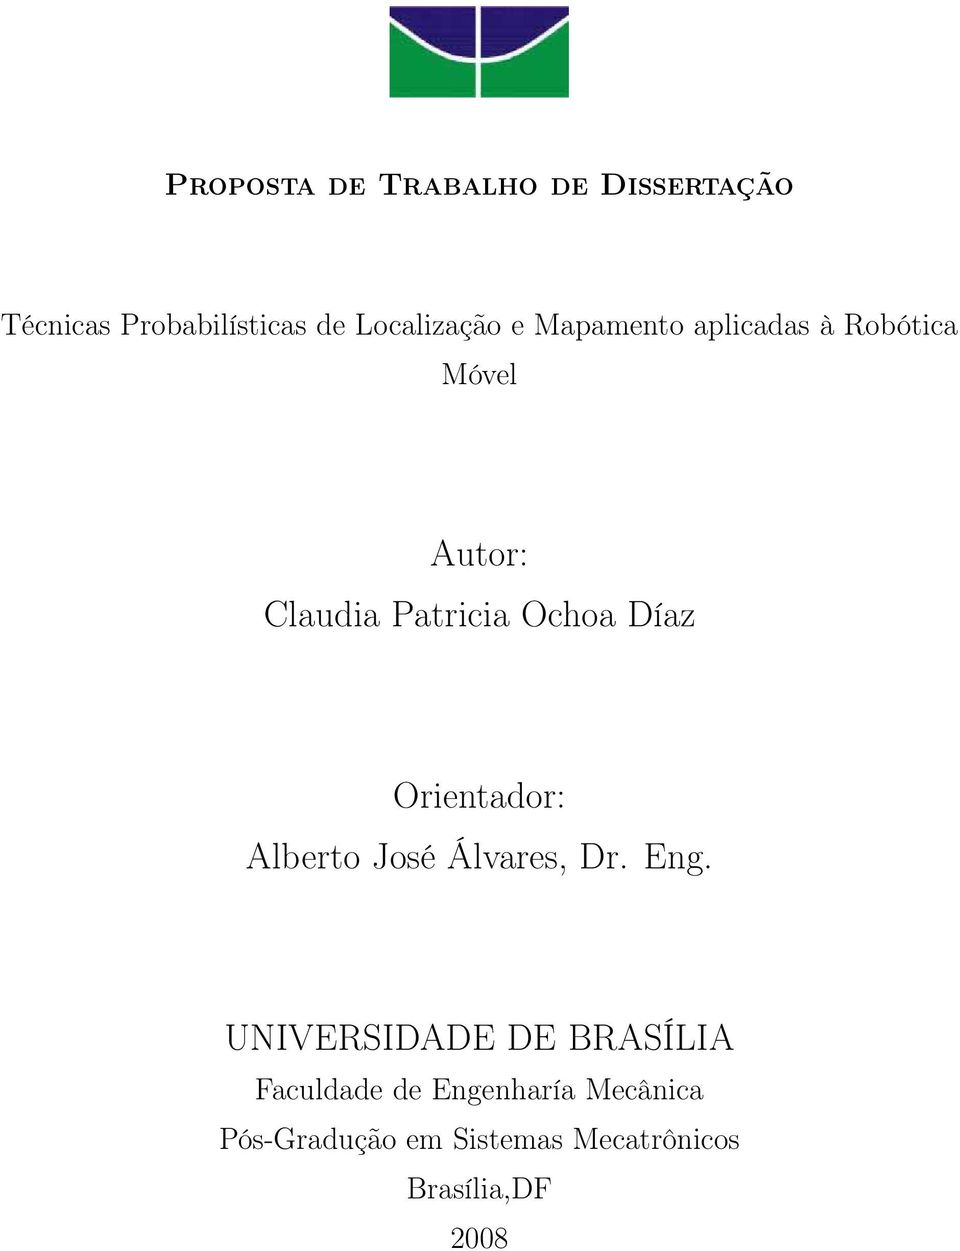 Orientador: Alberto José Álvares, Dr. Eng.